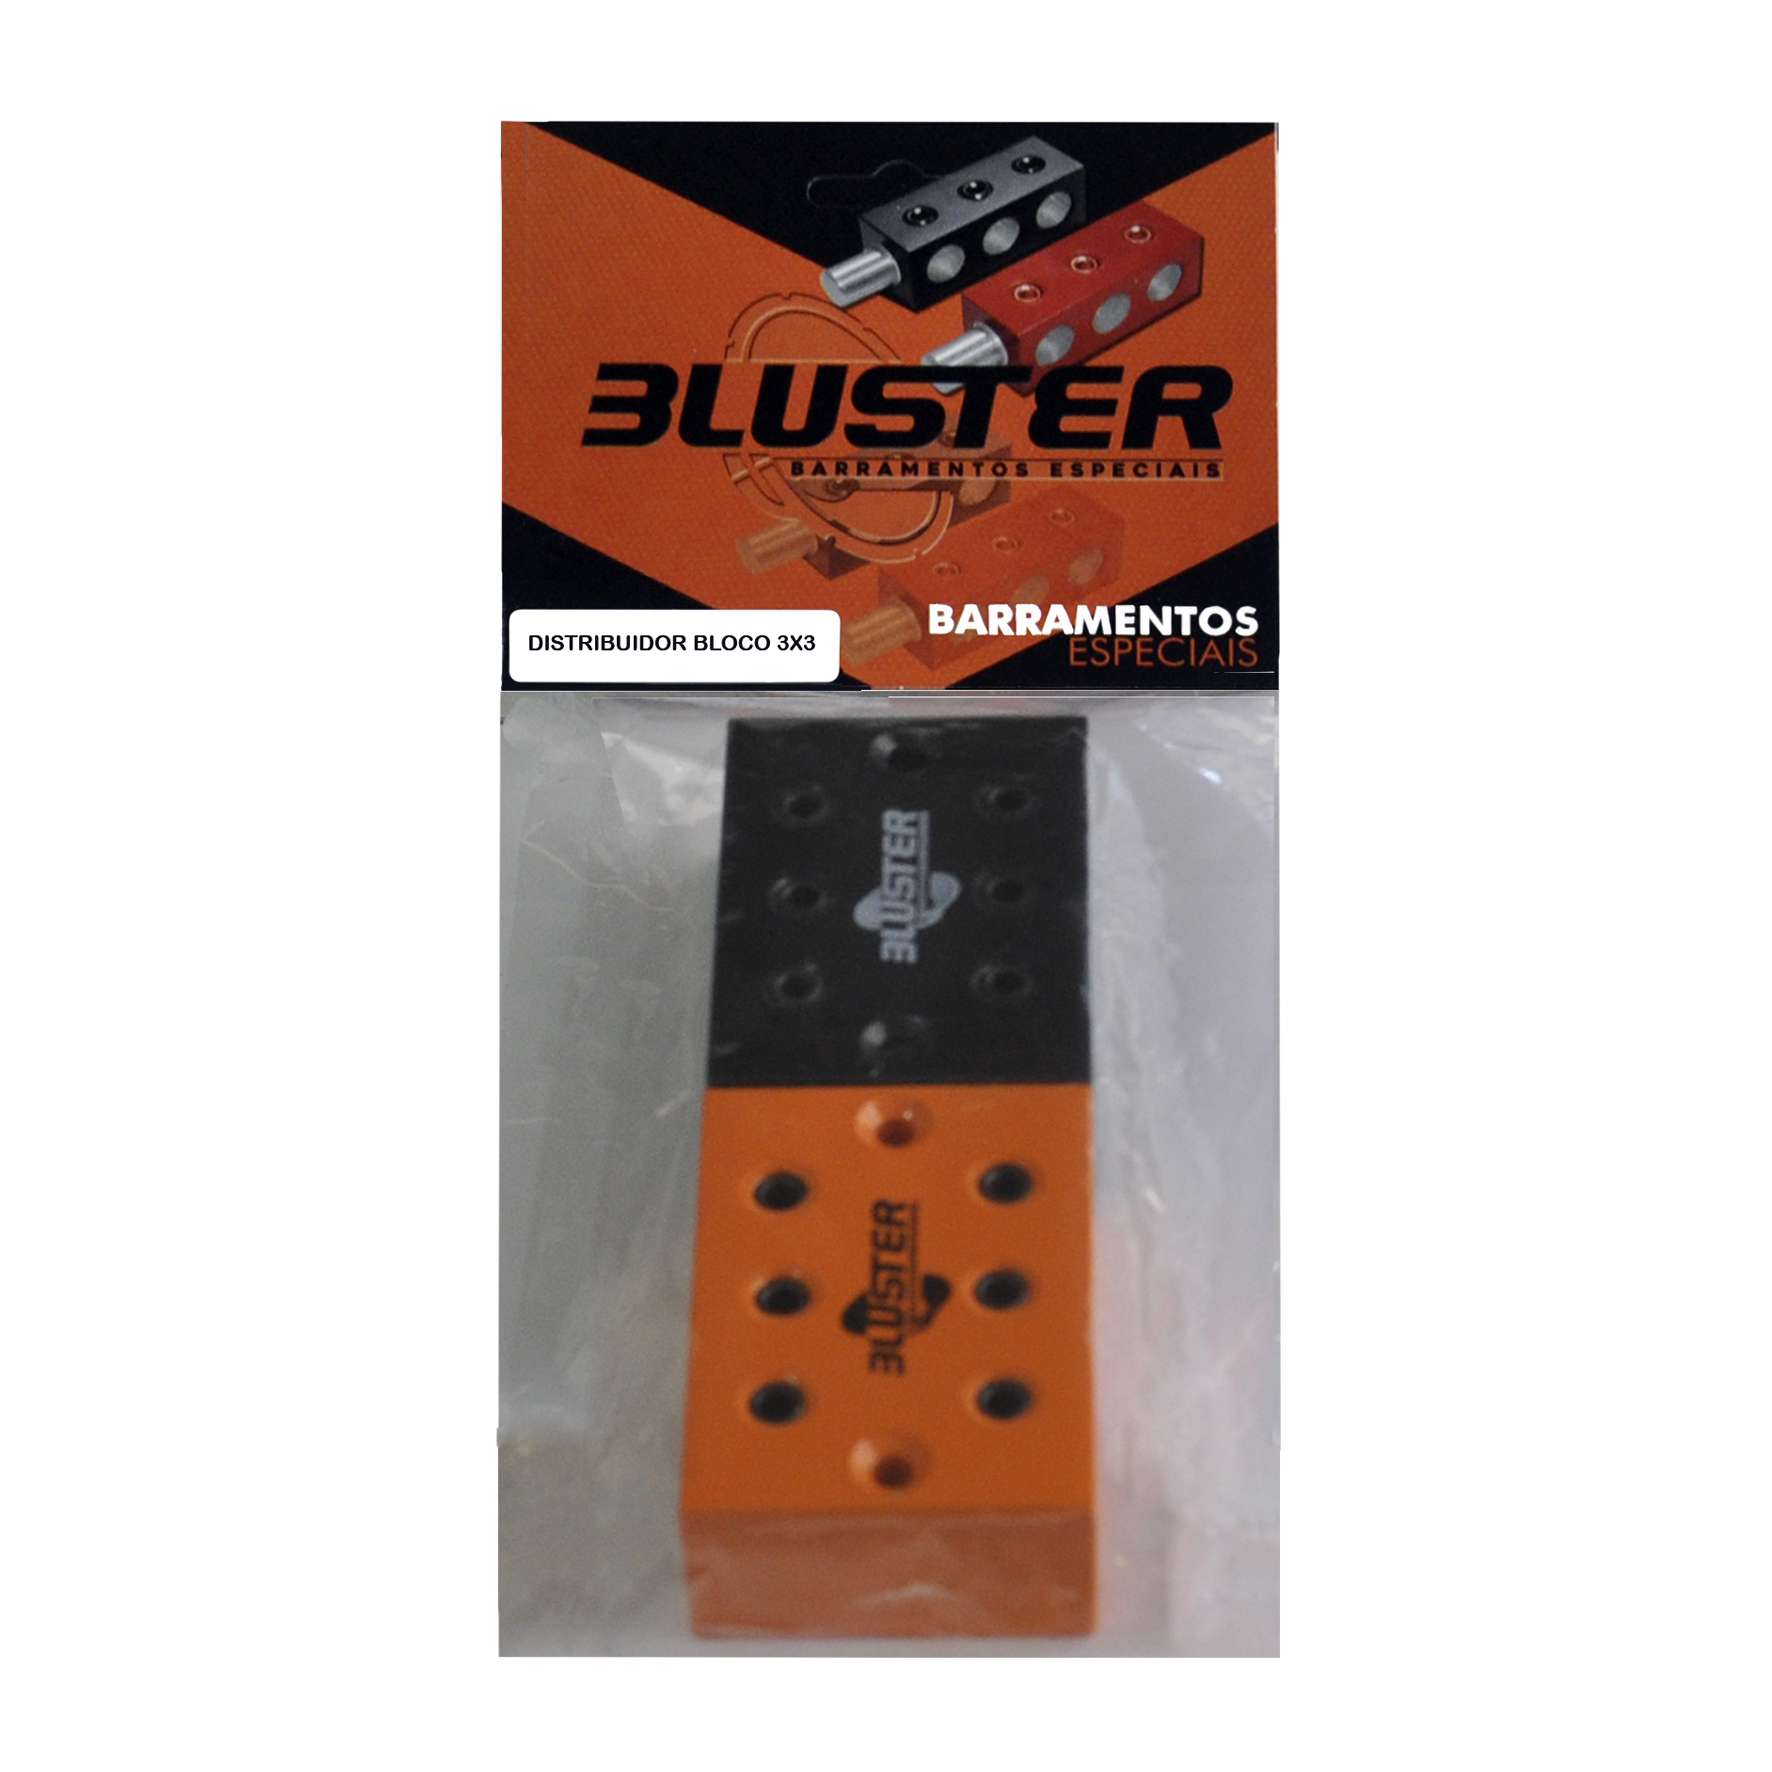 Distribuidor Bloco Bluster 3×3 Vista Superior